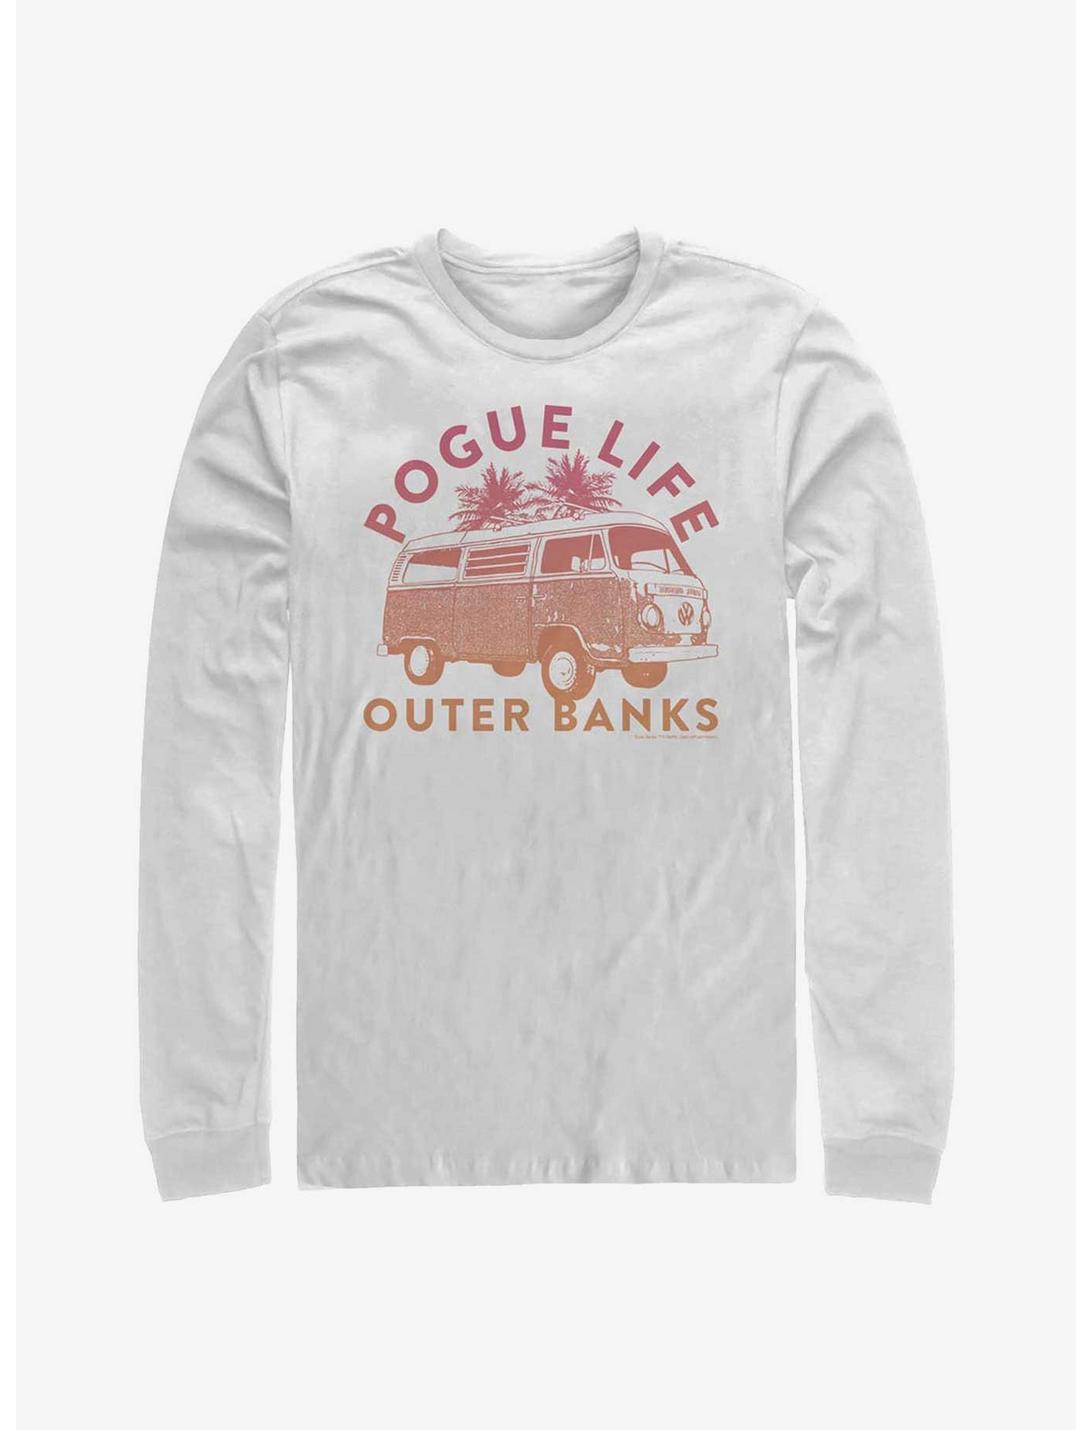 Outer Banks Pogue Life Long-Sleeve T-Shirt, WHITE, hi-res